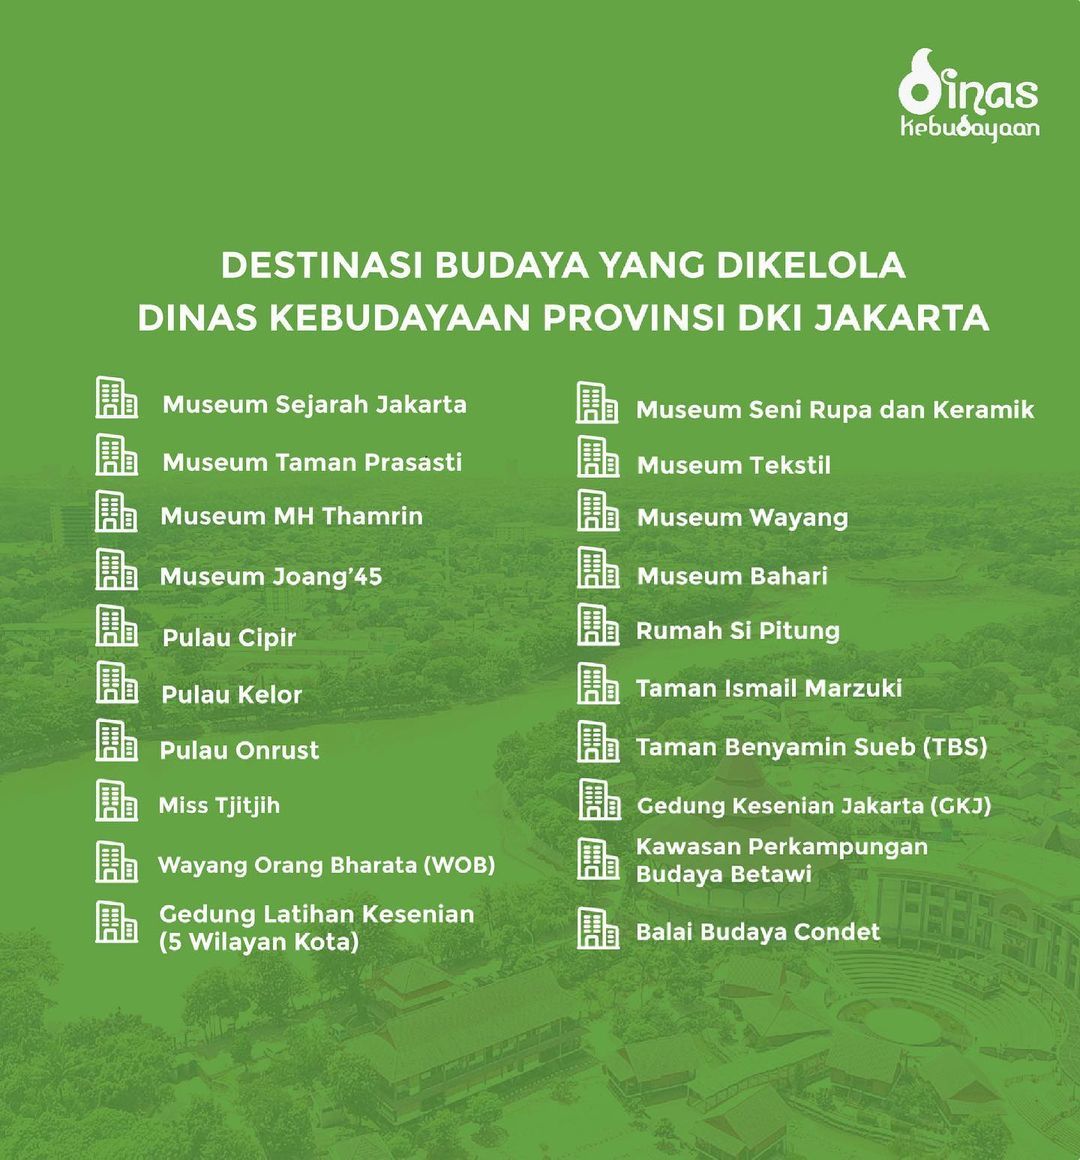 Pengumuman Penutupan Sementara Museum dan Kawasan Destinasi Budaya di Jakarta. (ist)